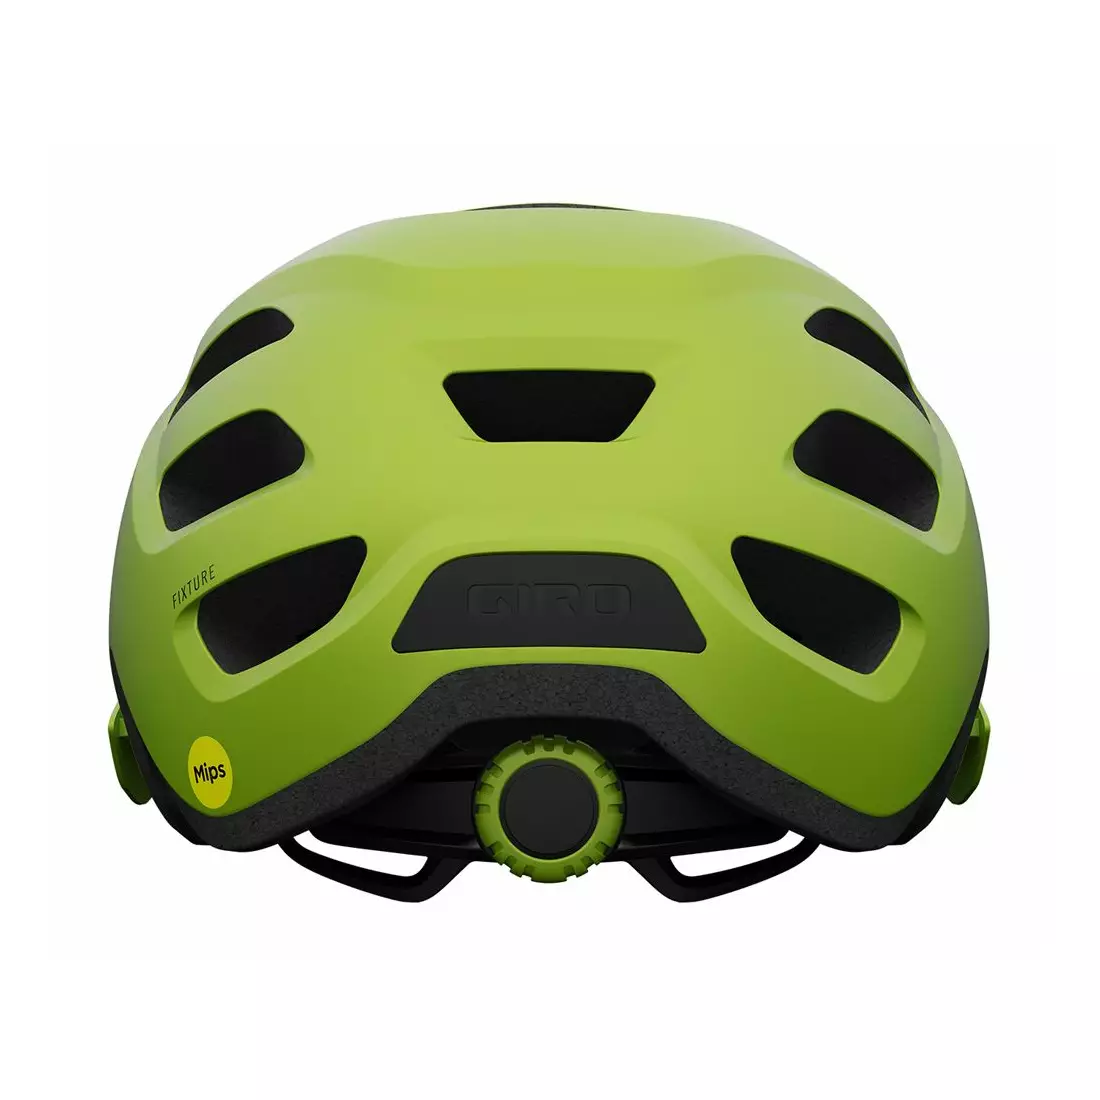 GIRO FIXTURE Bicycle helmet mtb, matte ano lime 